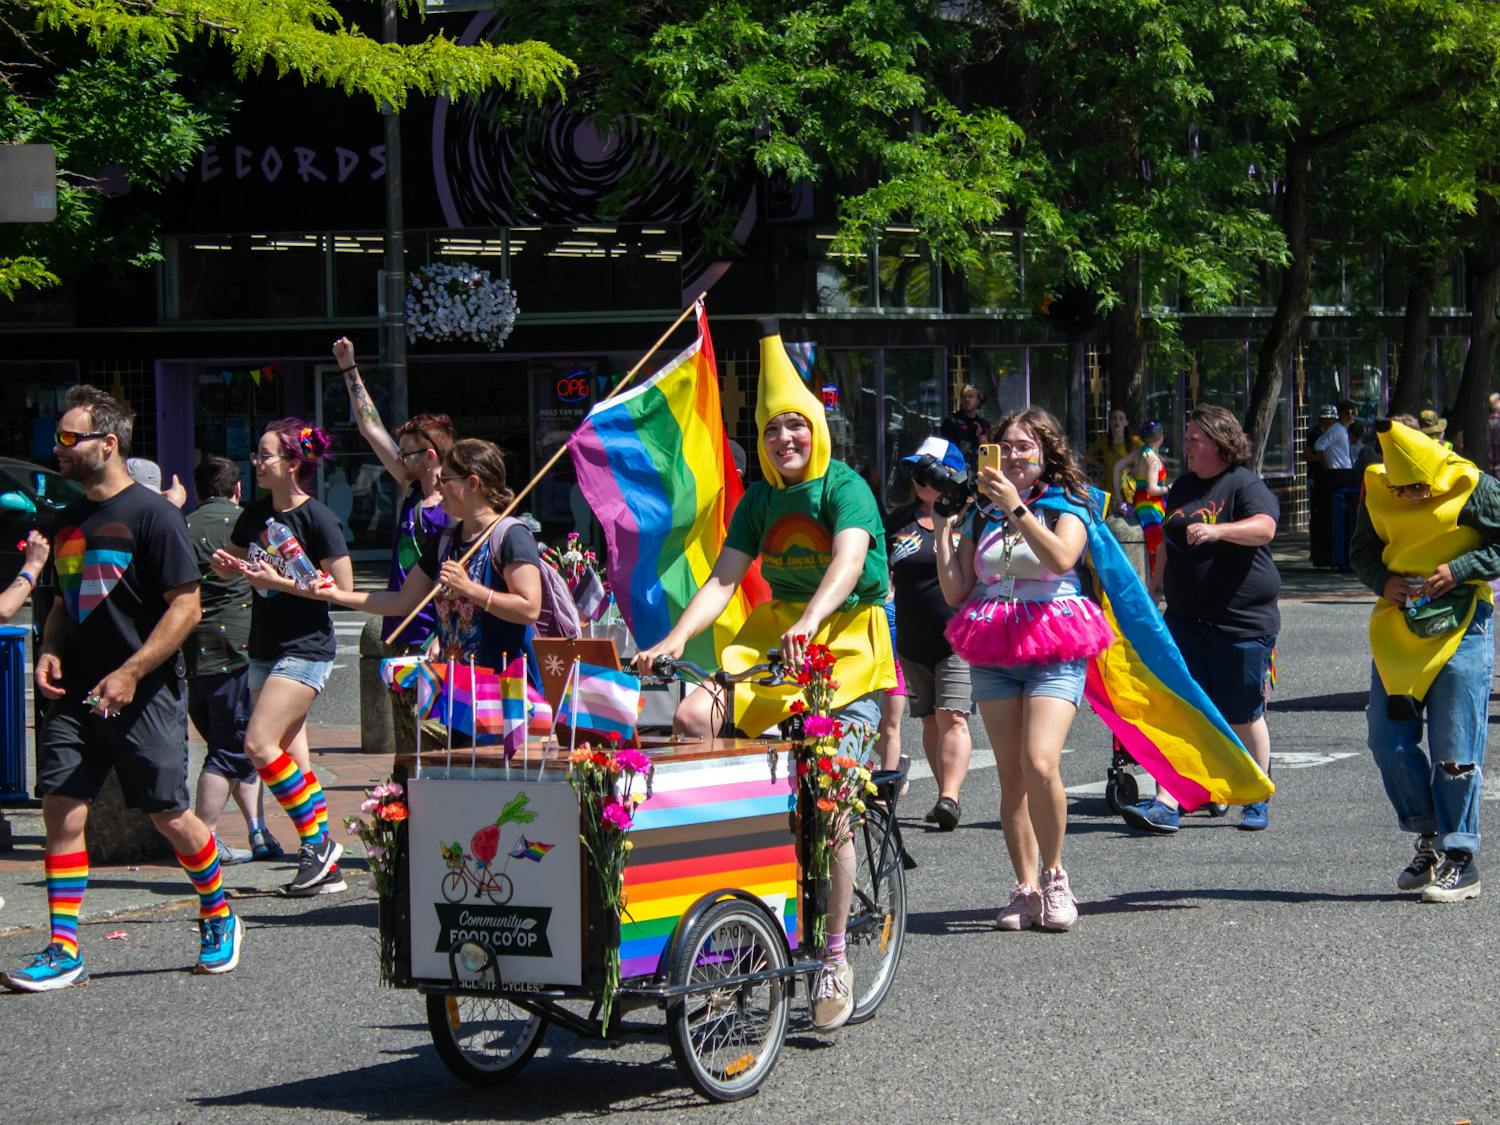 Pride parade returns to Bellingham